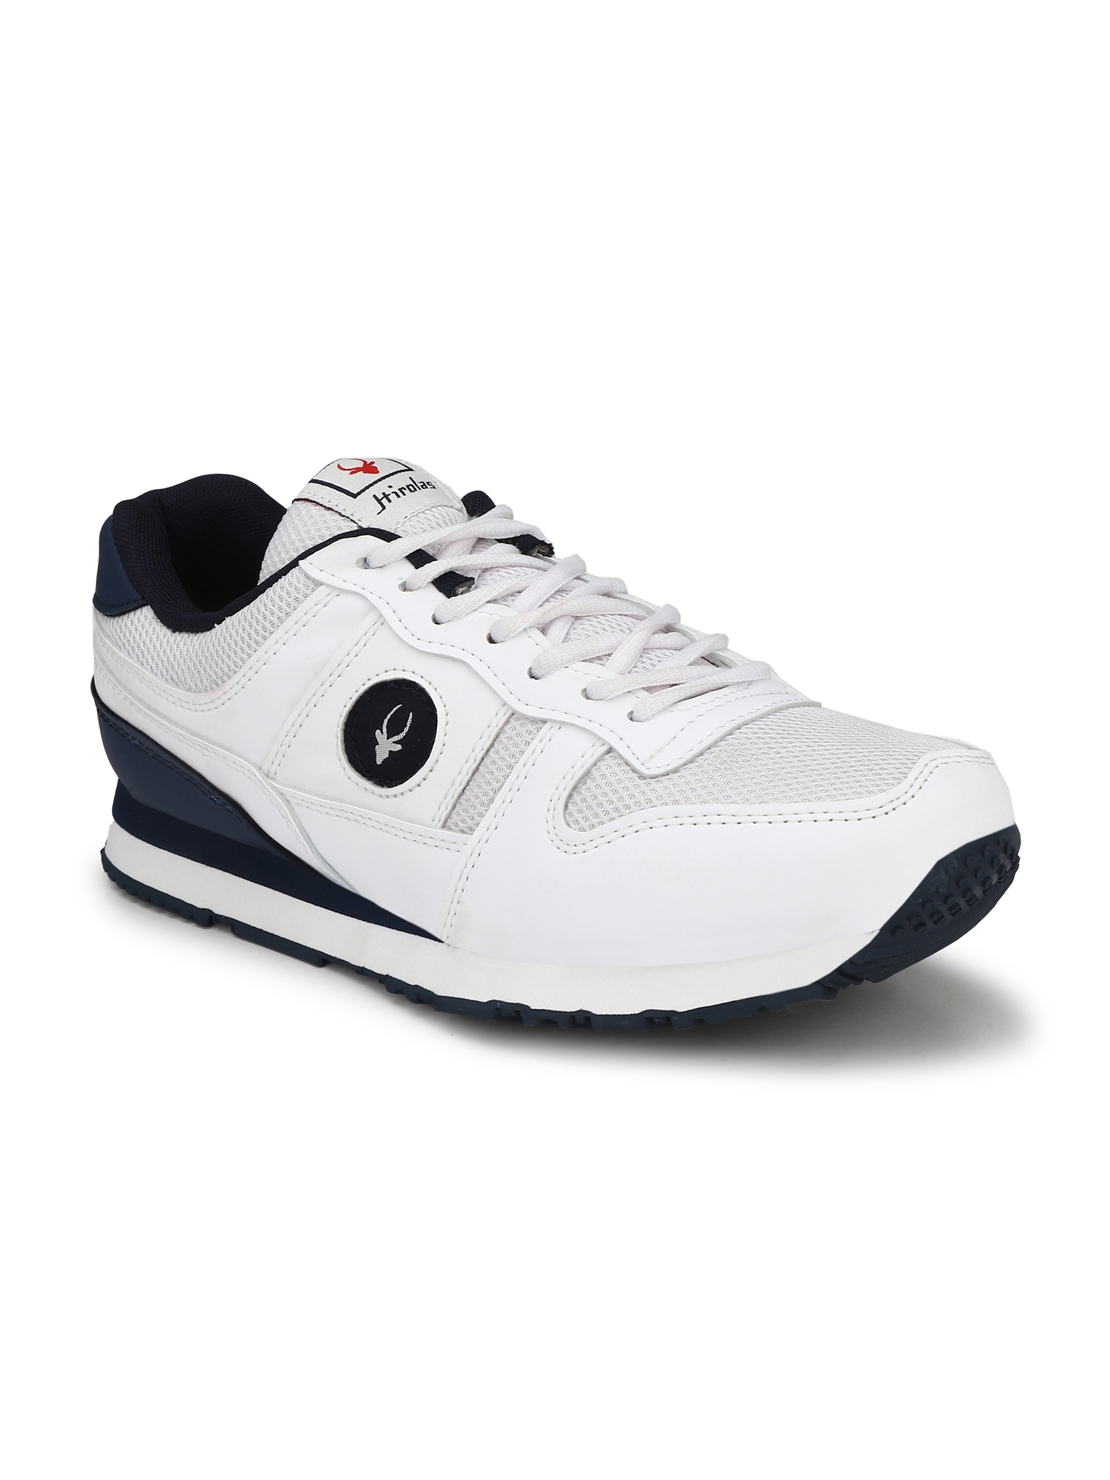 Hirolas | Hirolas Men's Multisport Jogger Shoes- White/Blue